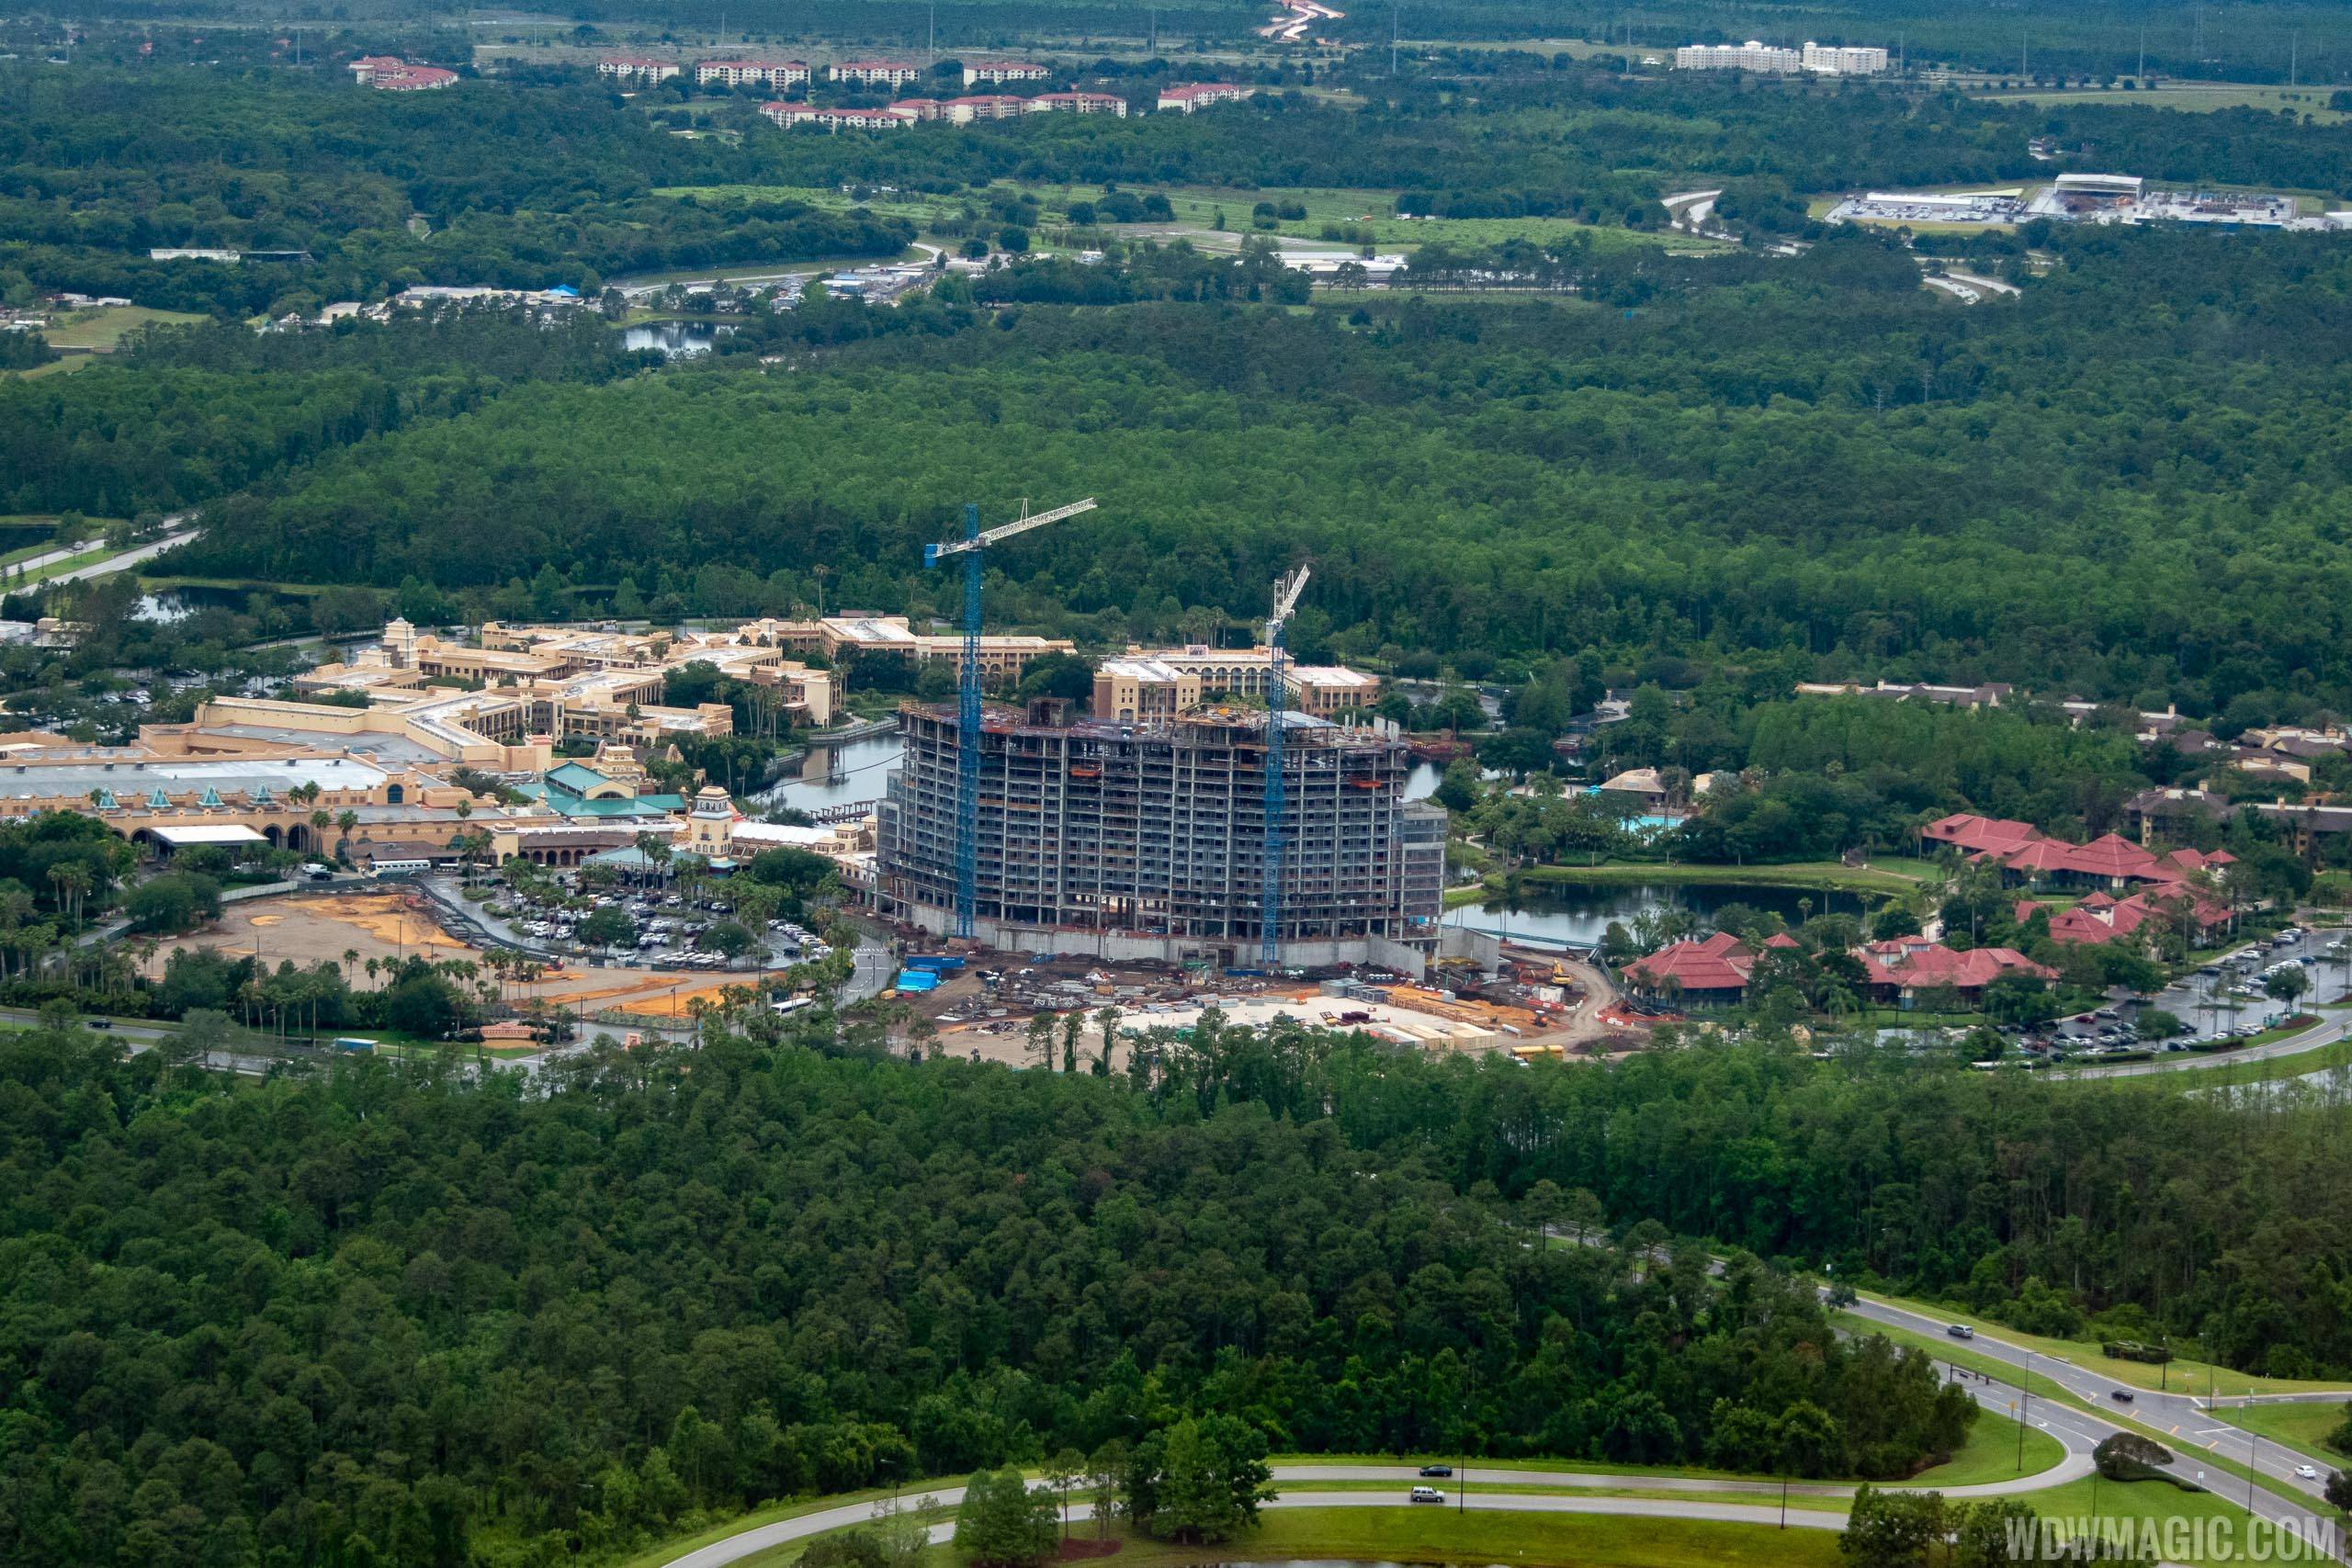 PHOTOS - Disney's Coronado Springs Resort tower construction